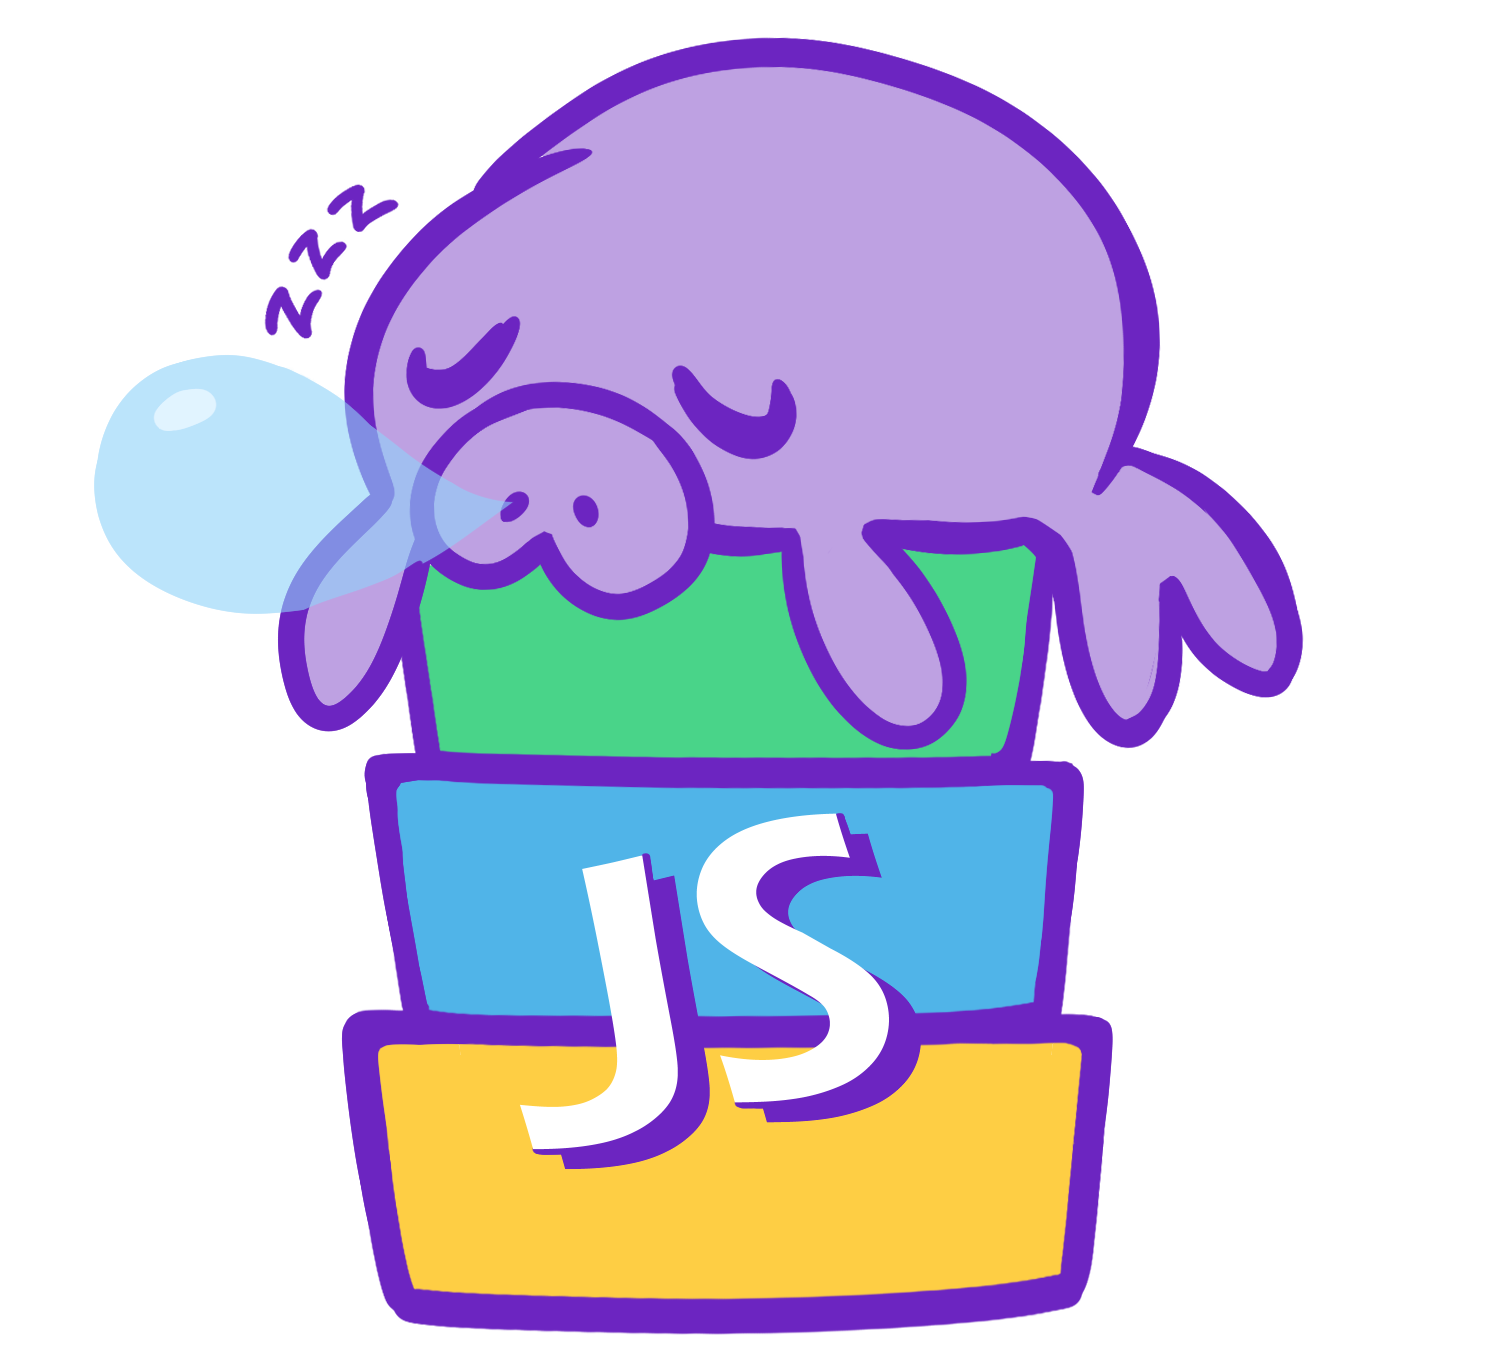 The Boring JavaScript Stack Logo